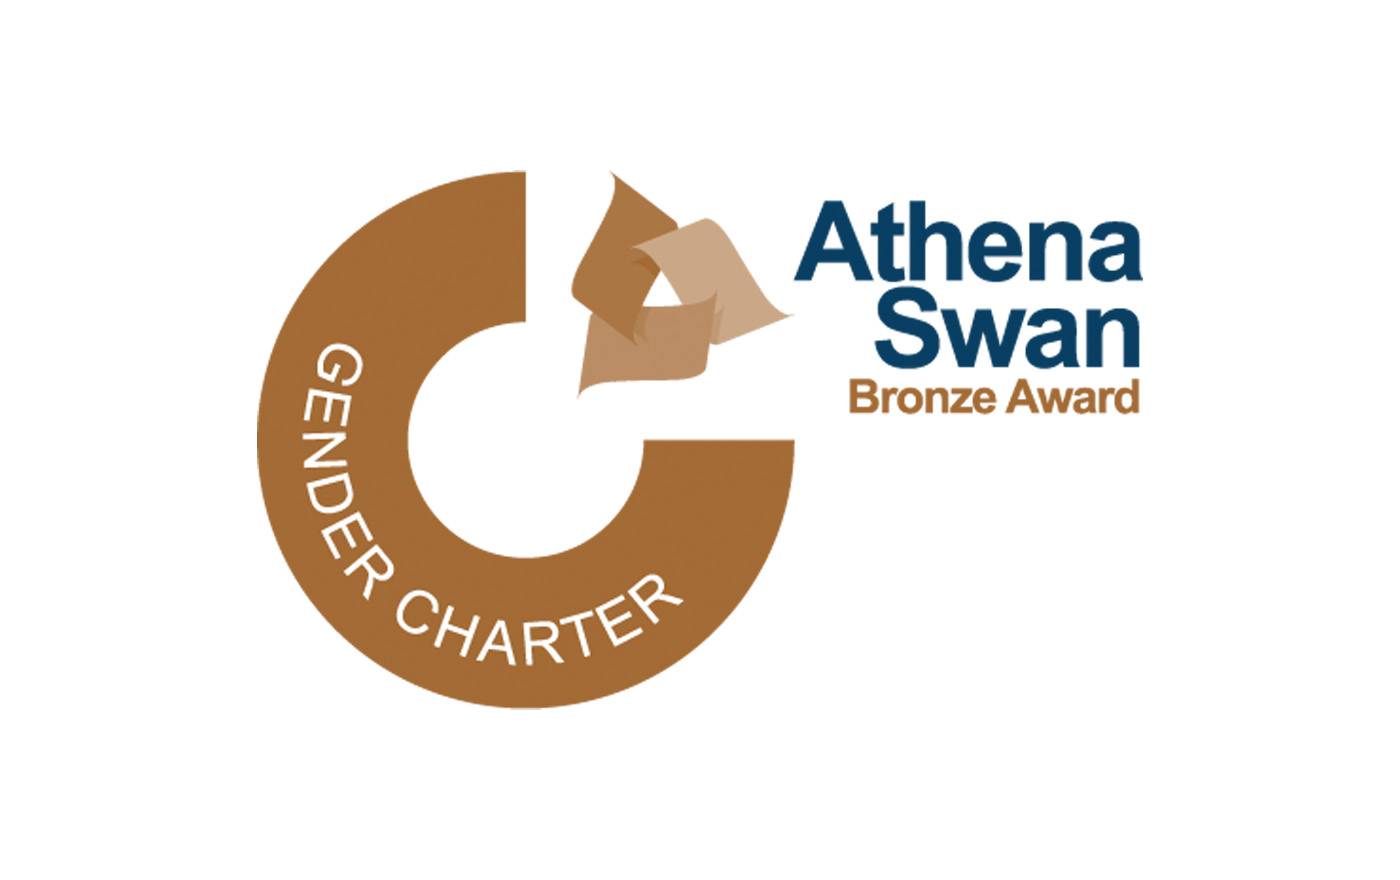 The Athena SWAN Bronze Logo